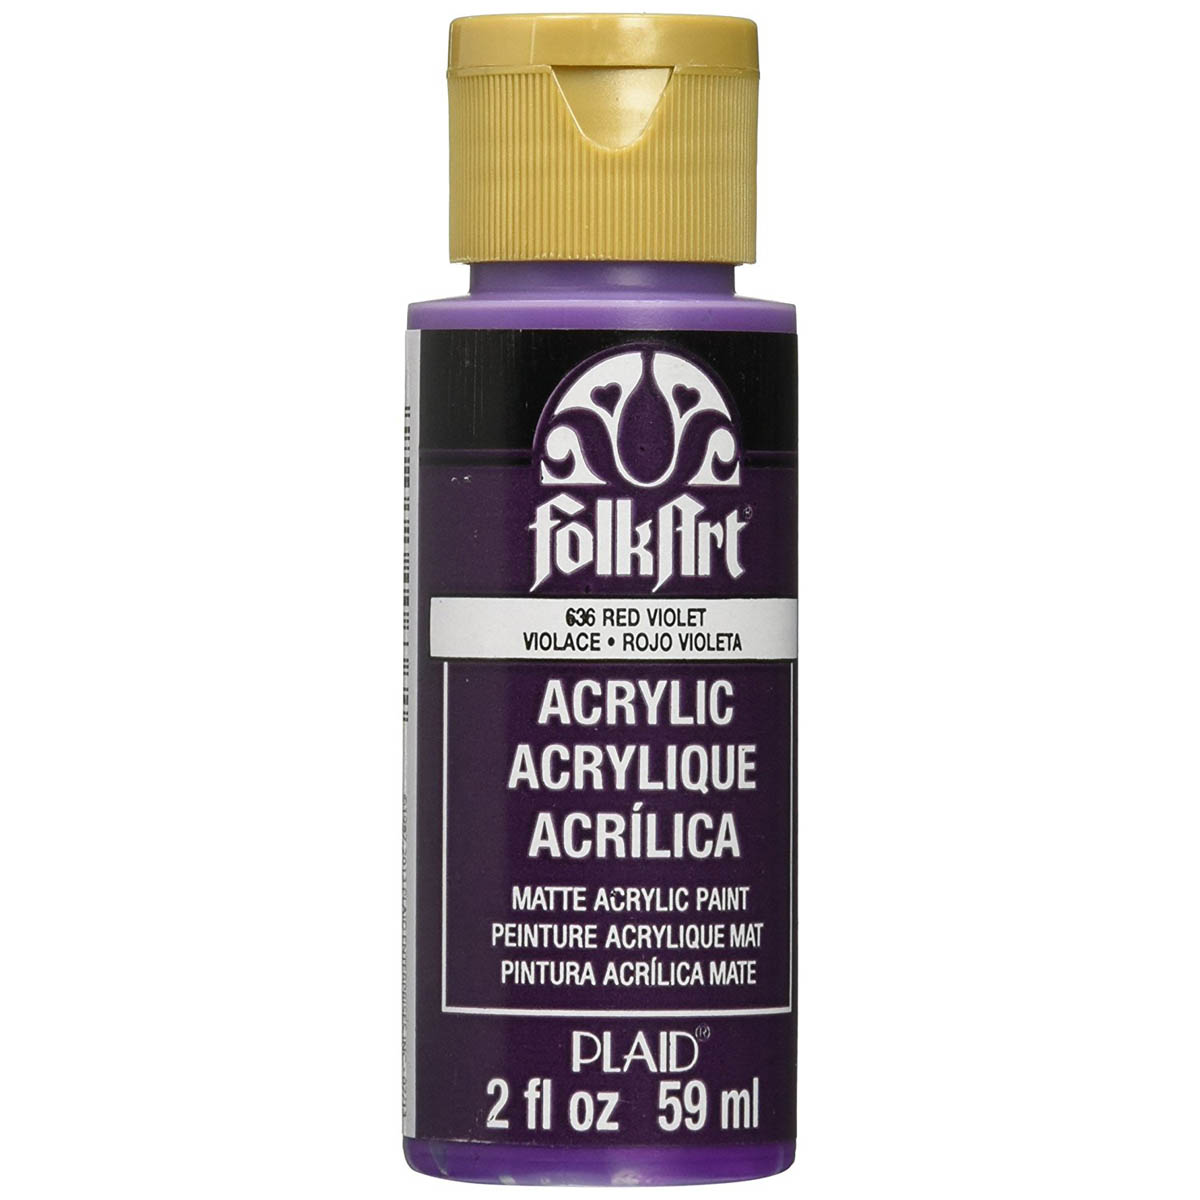 FolkArt ® Acrylic Colors - Red Violet, 2 oz. - 636